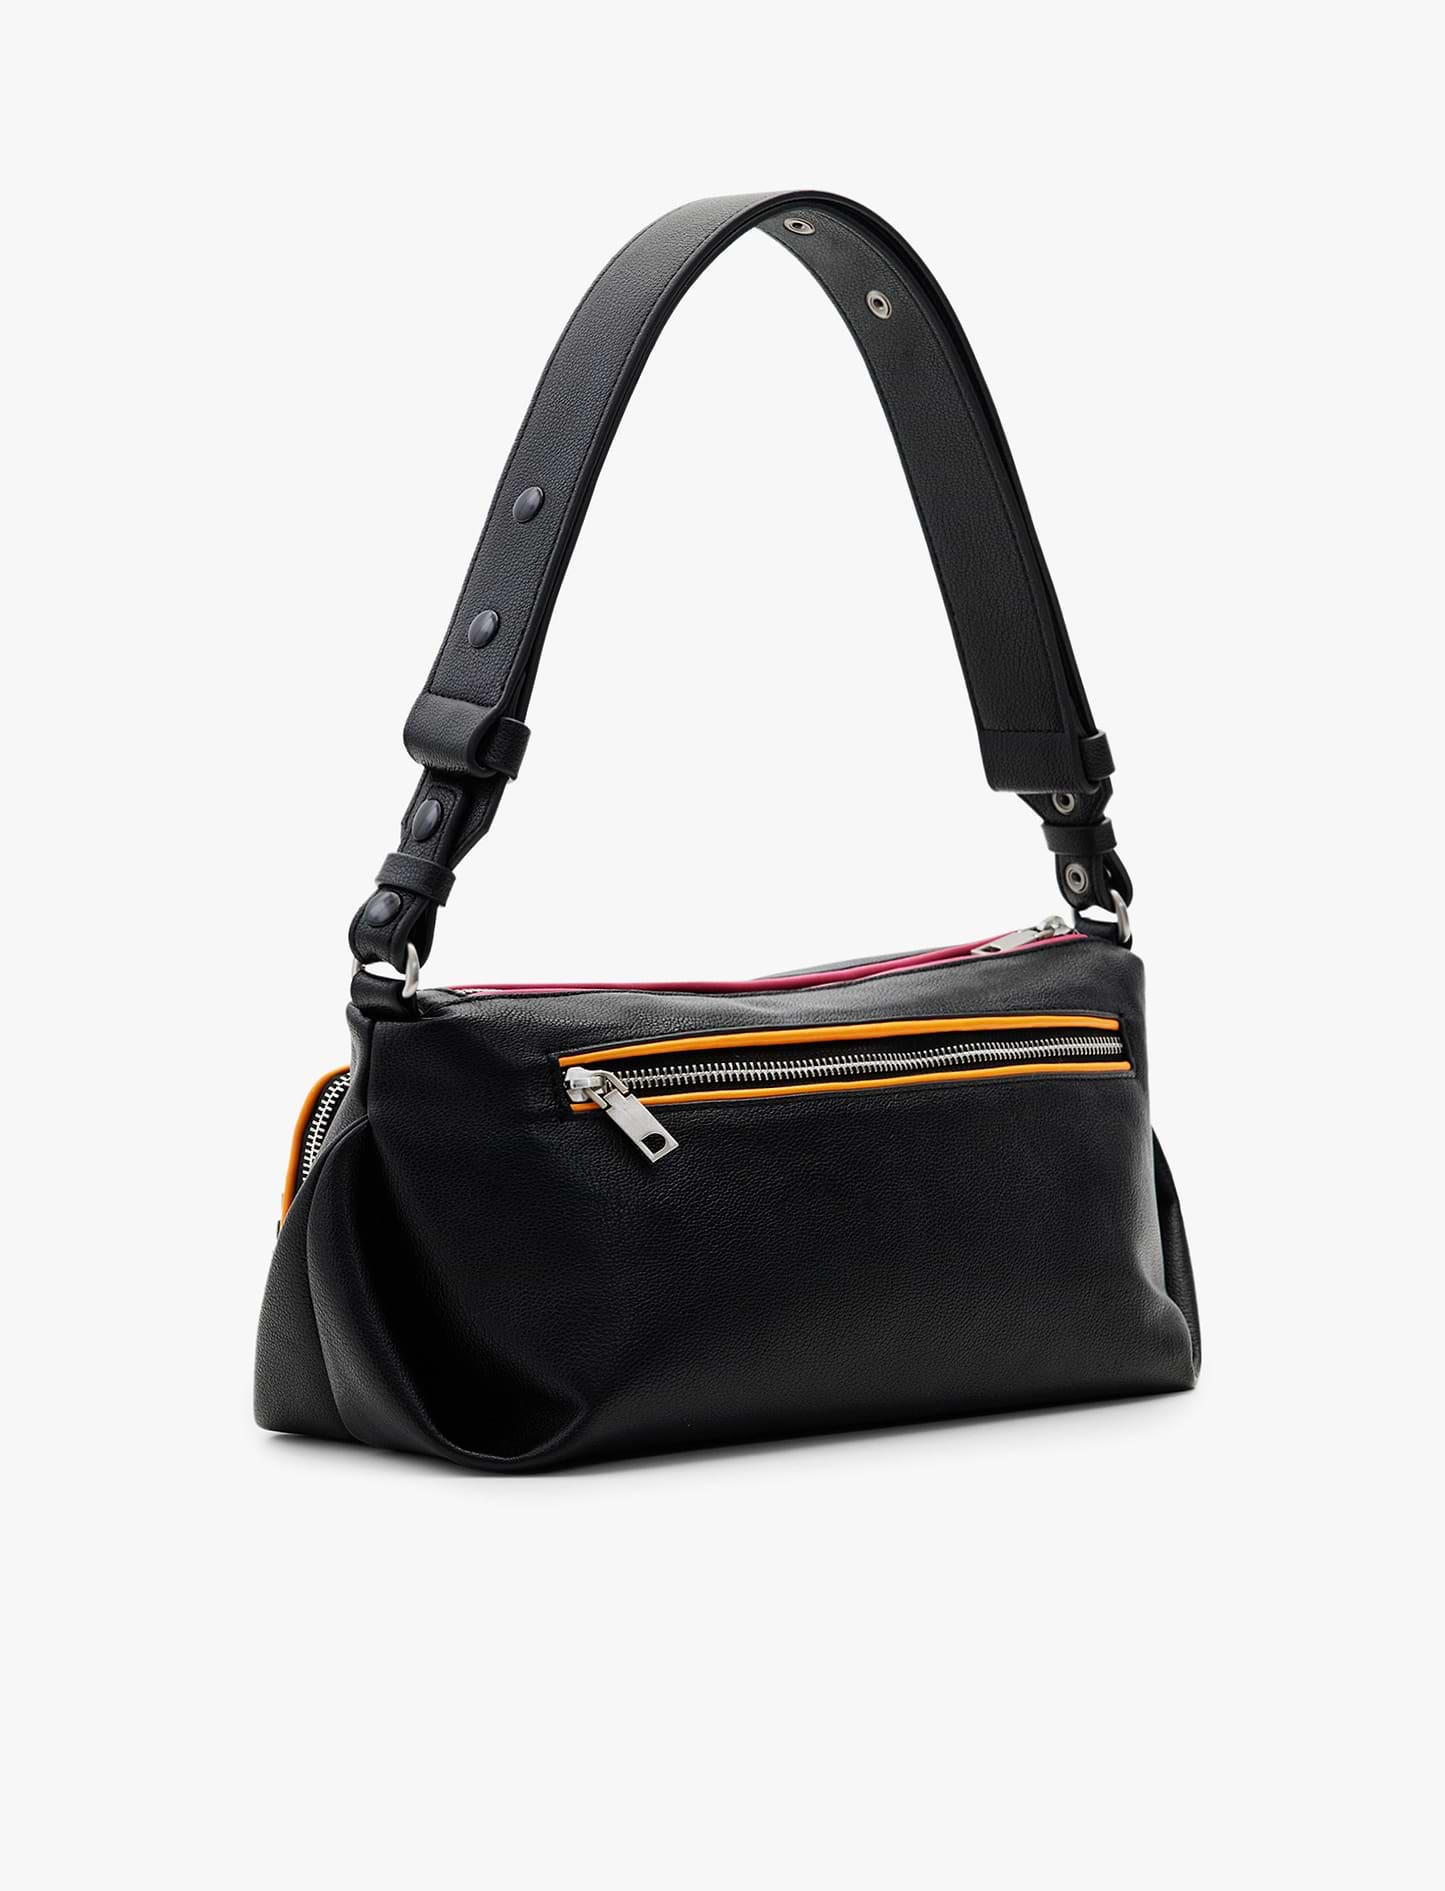 Desigual Bag Prime Urus Maxi - תיק כתף בצבע שחור